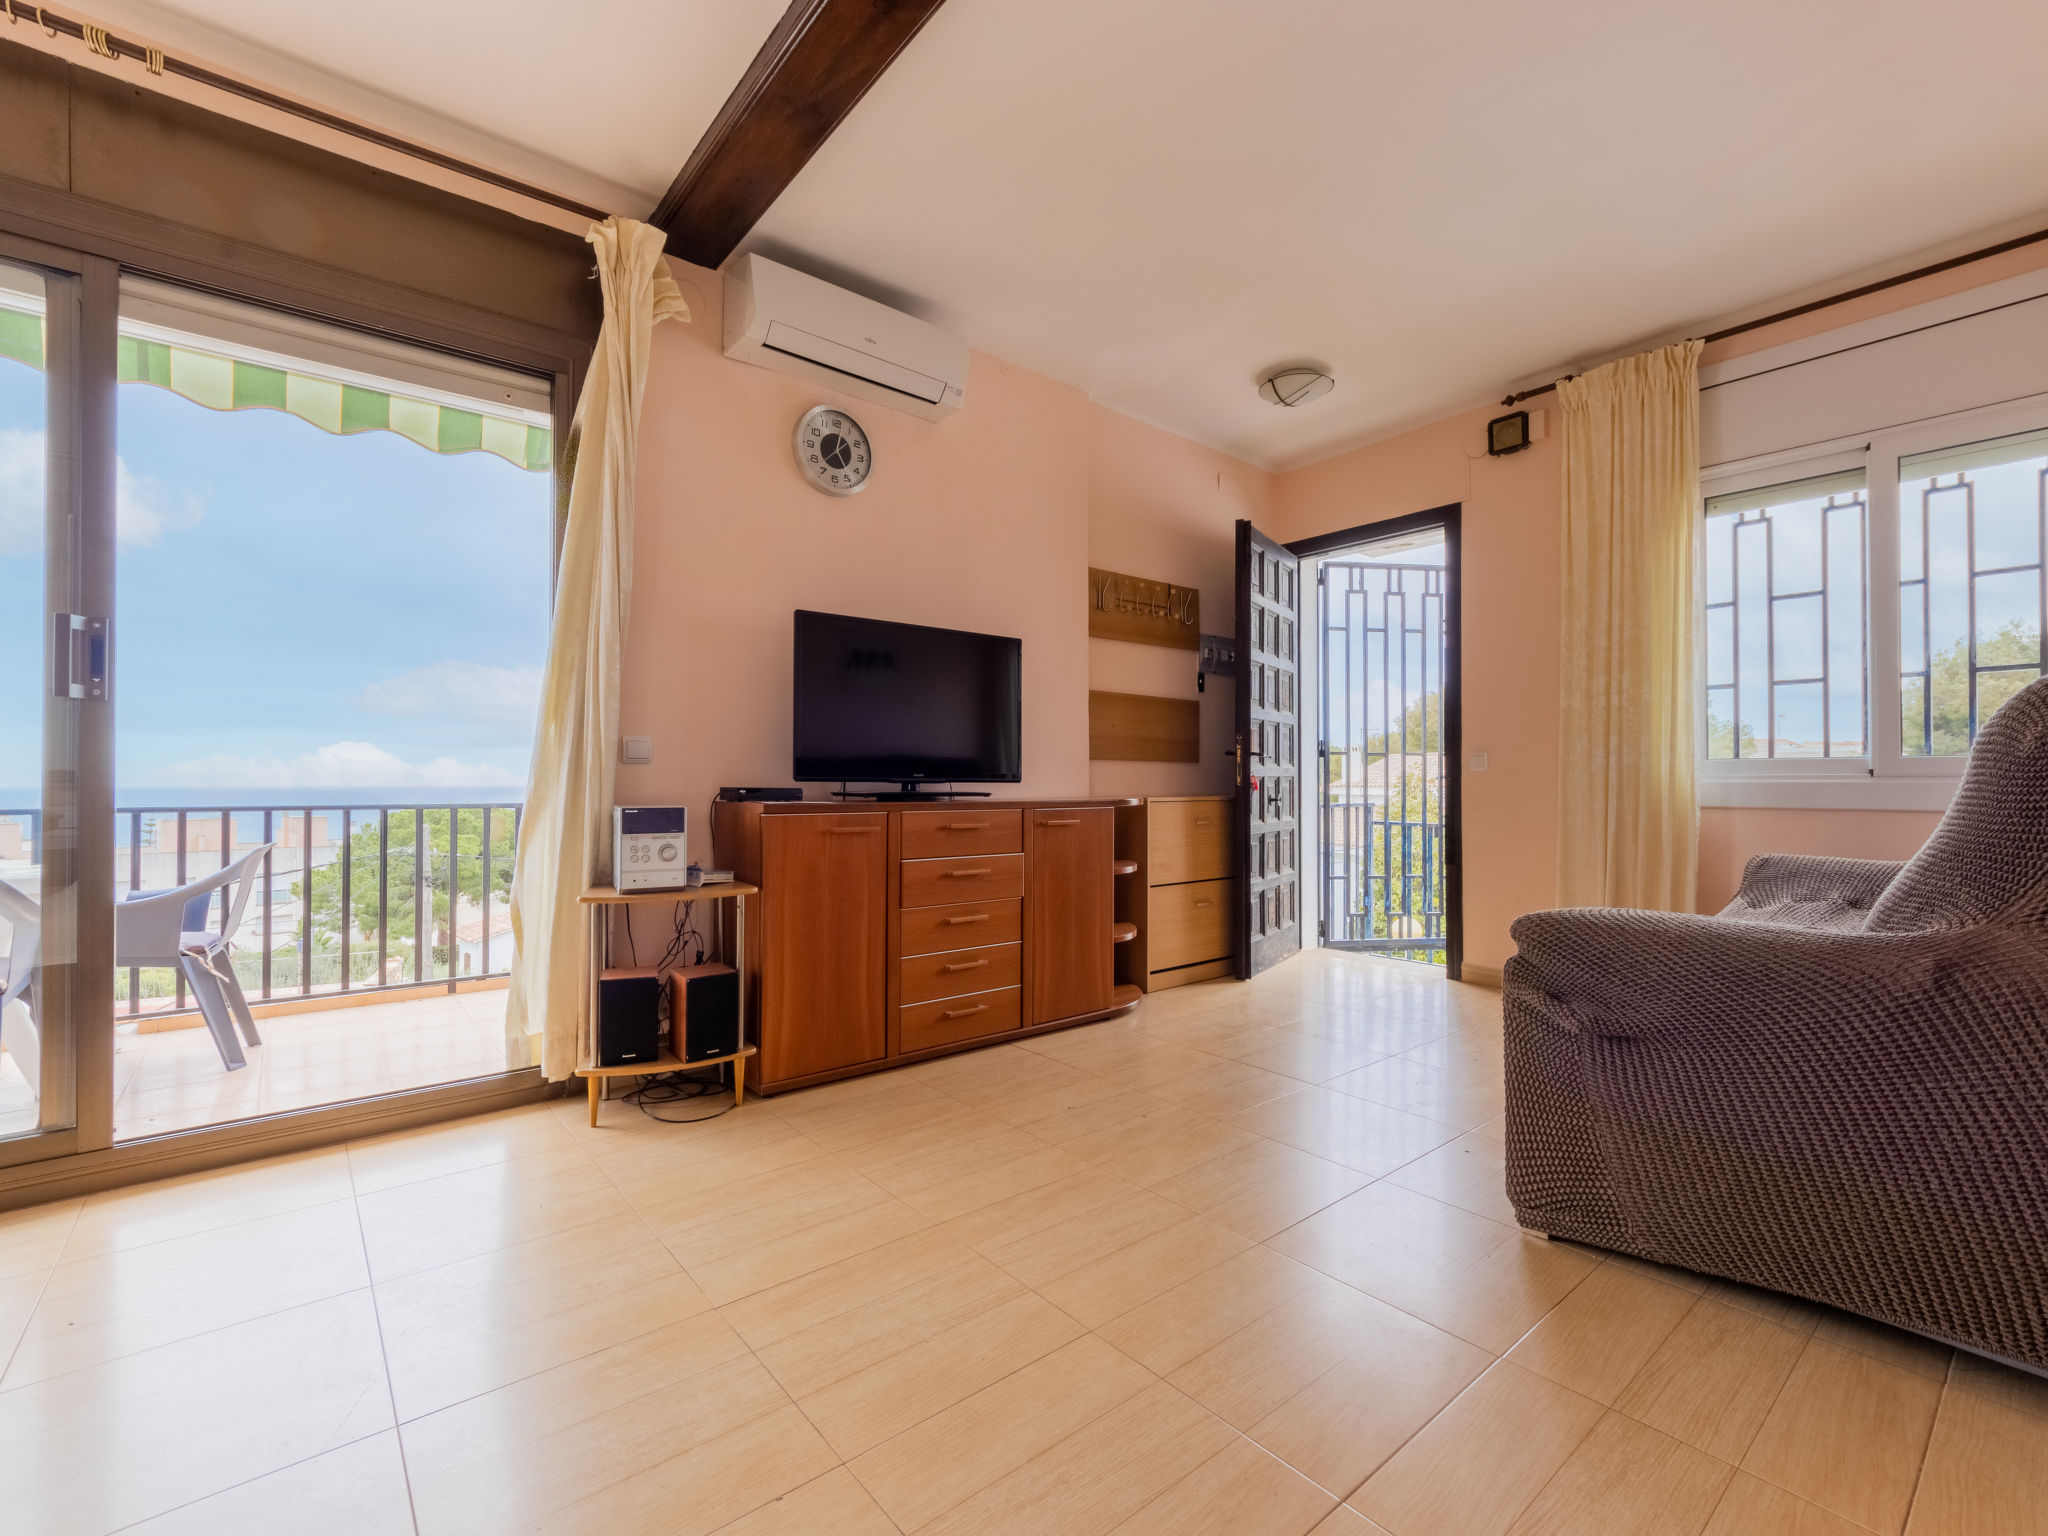 Photo 7 - Appartement de 2 chambres à Torredembarra avec terrasse et vues à la mer